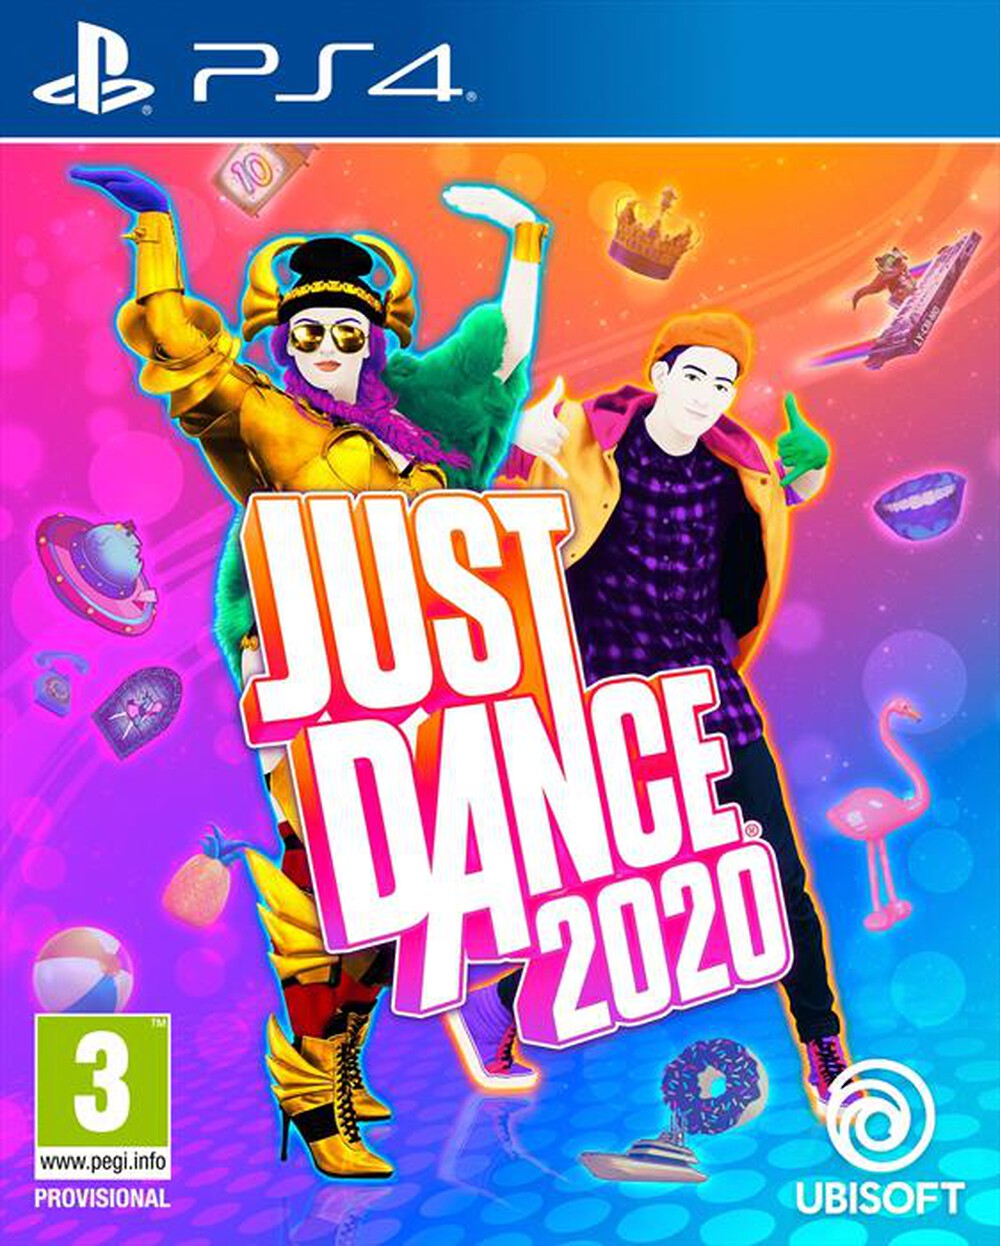 "UBISOFT - JUST DANCE 2020 ITA PS4"